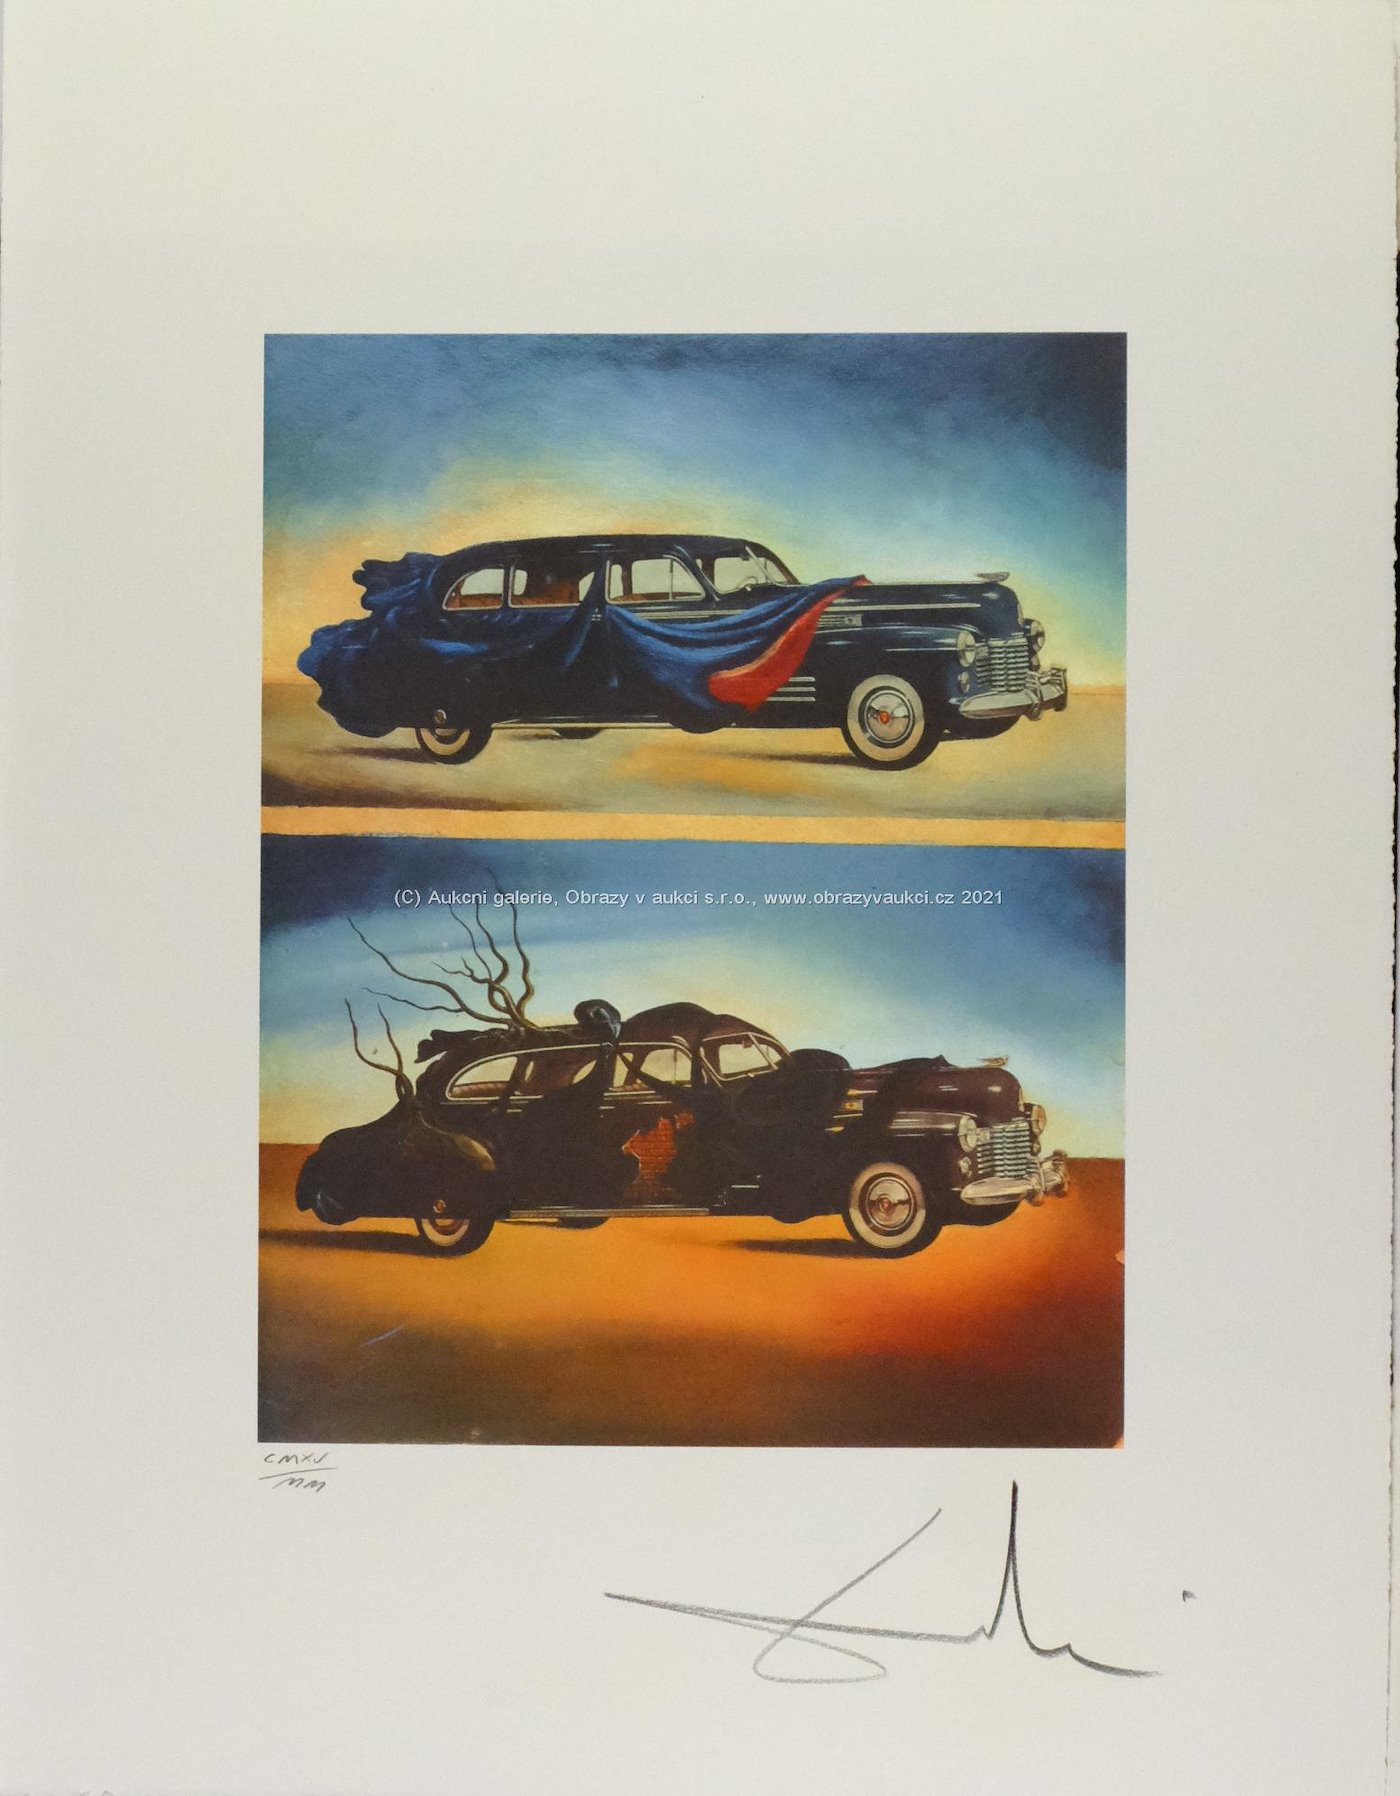 Salvador Dalí - The Automobile Clothed